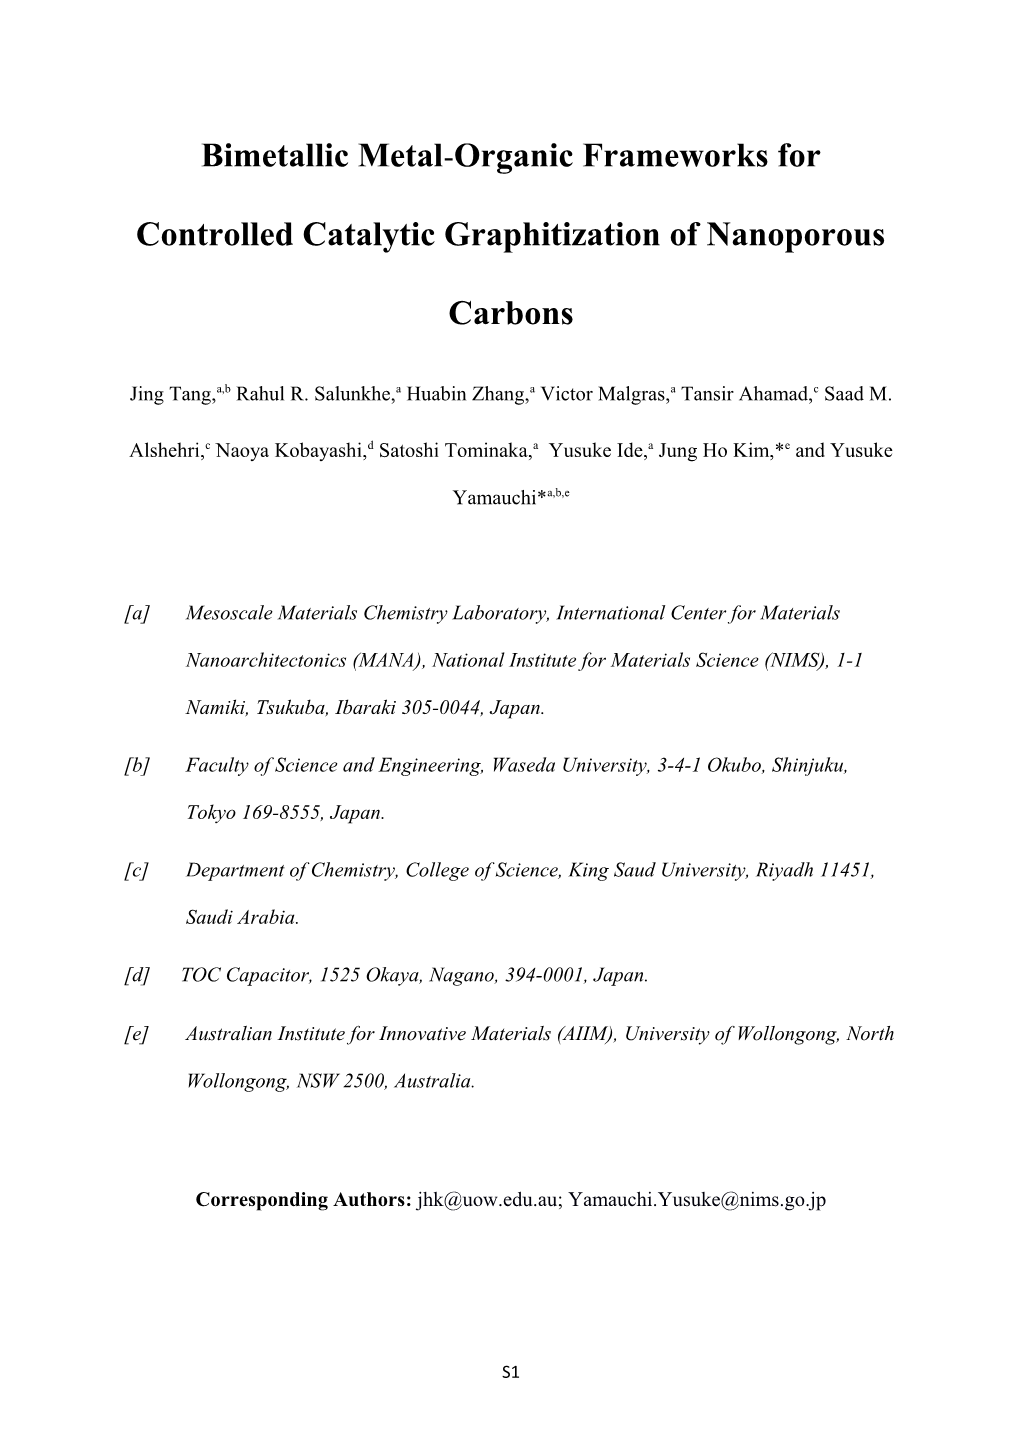 Bimetallic Metal-Organic Frameworks for Controlled Catalytic Graphitization of Nanoporous